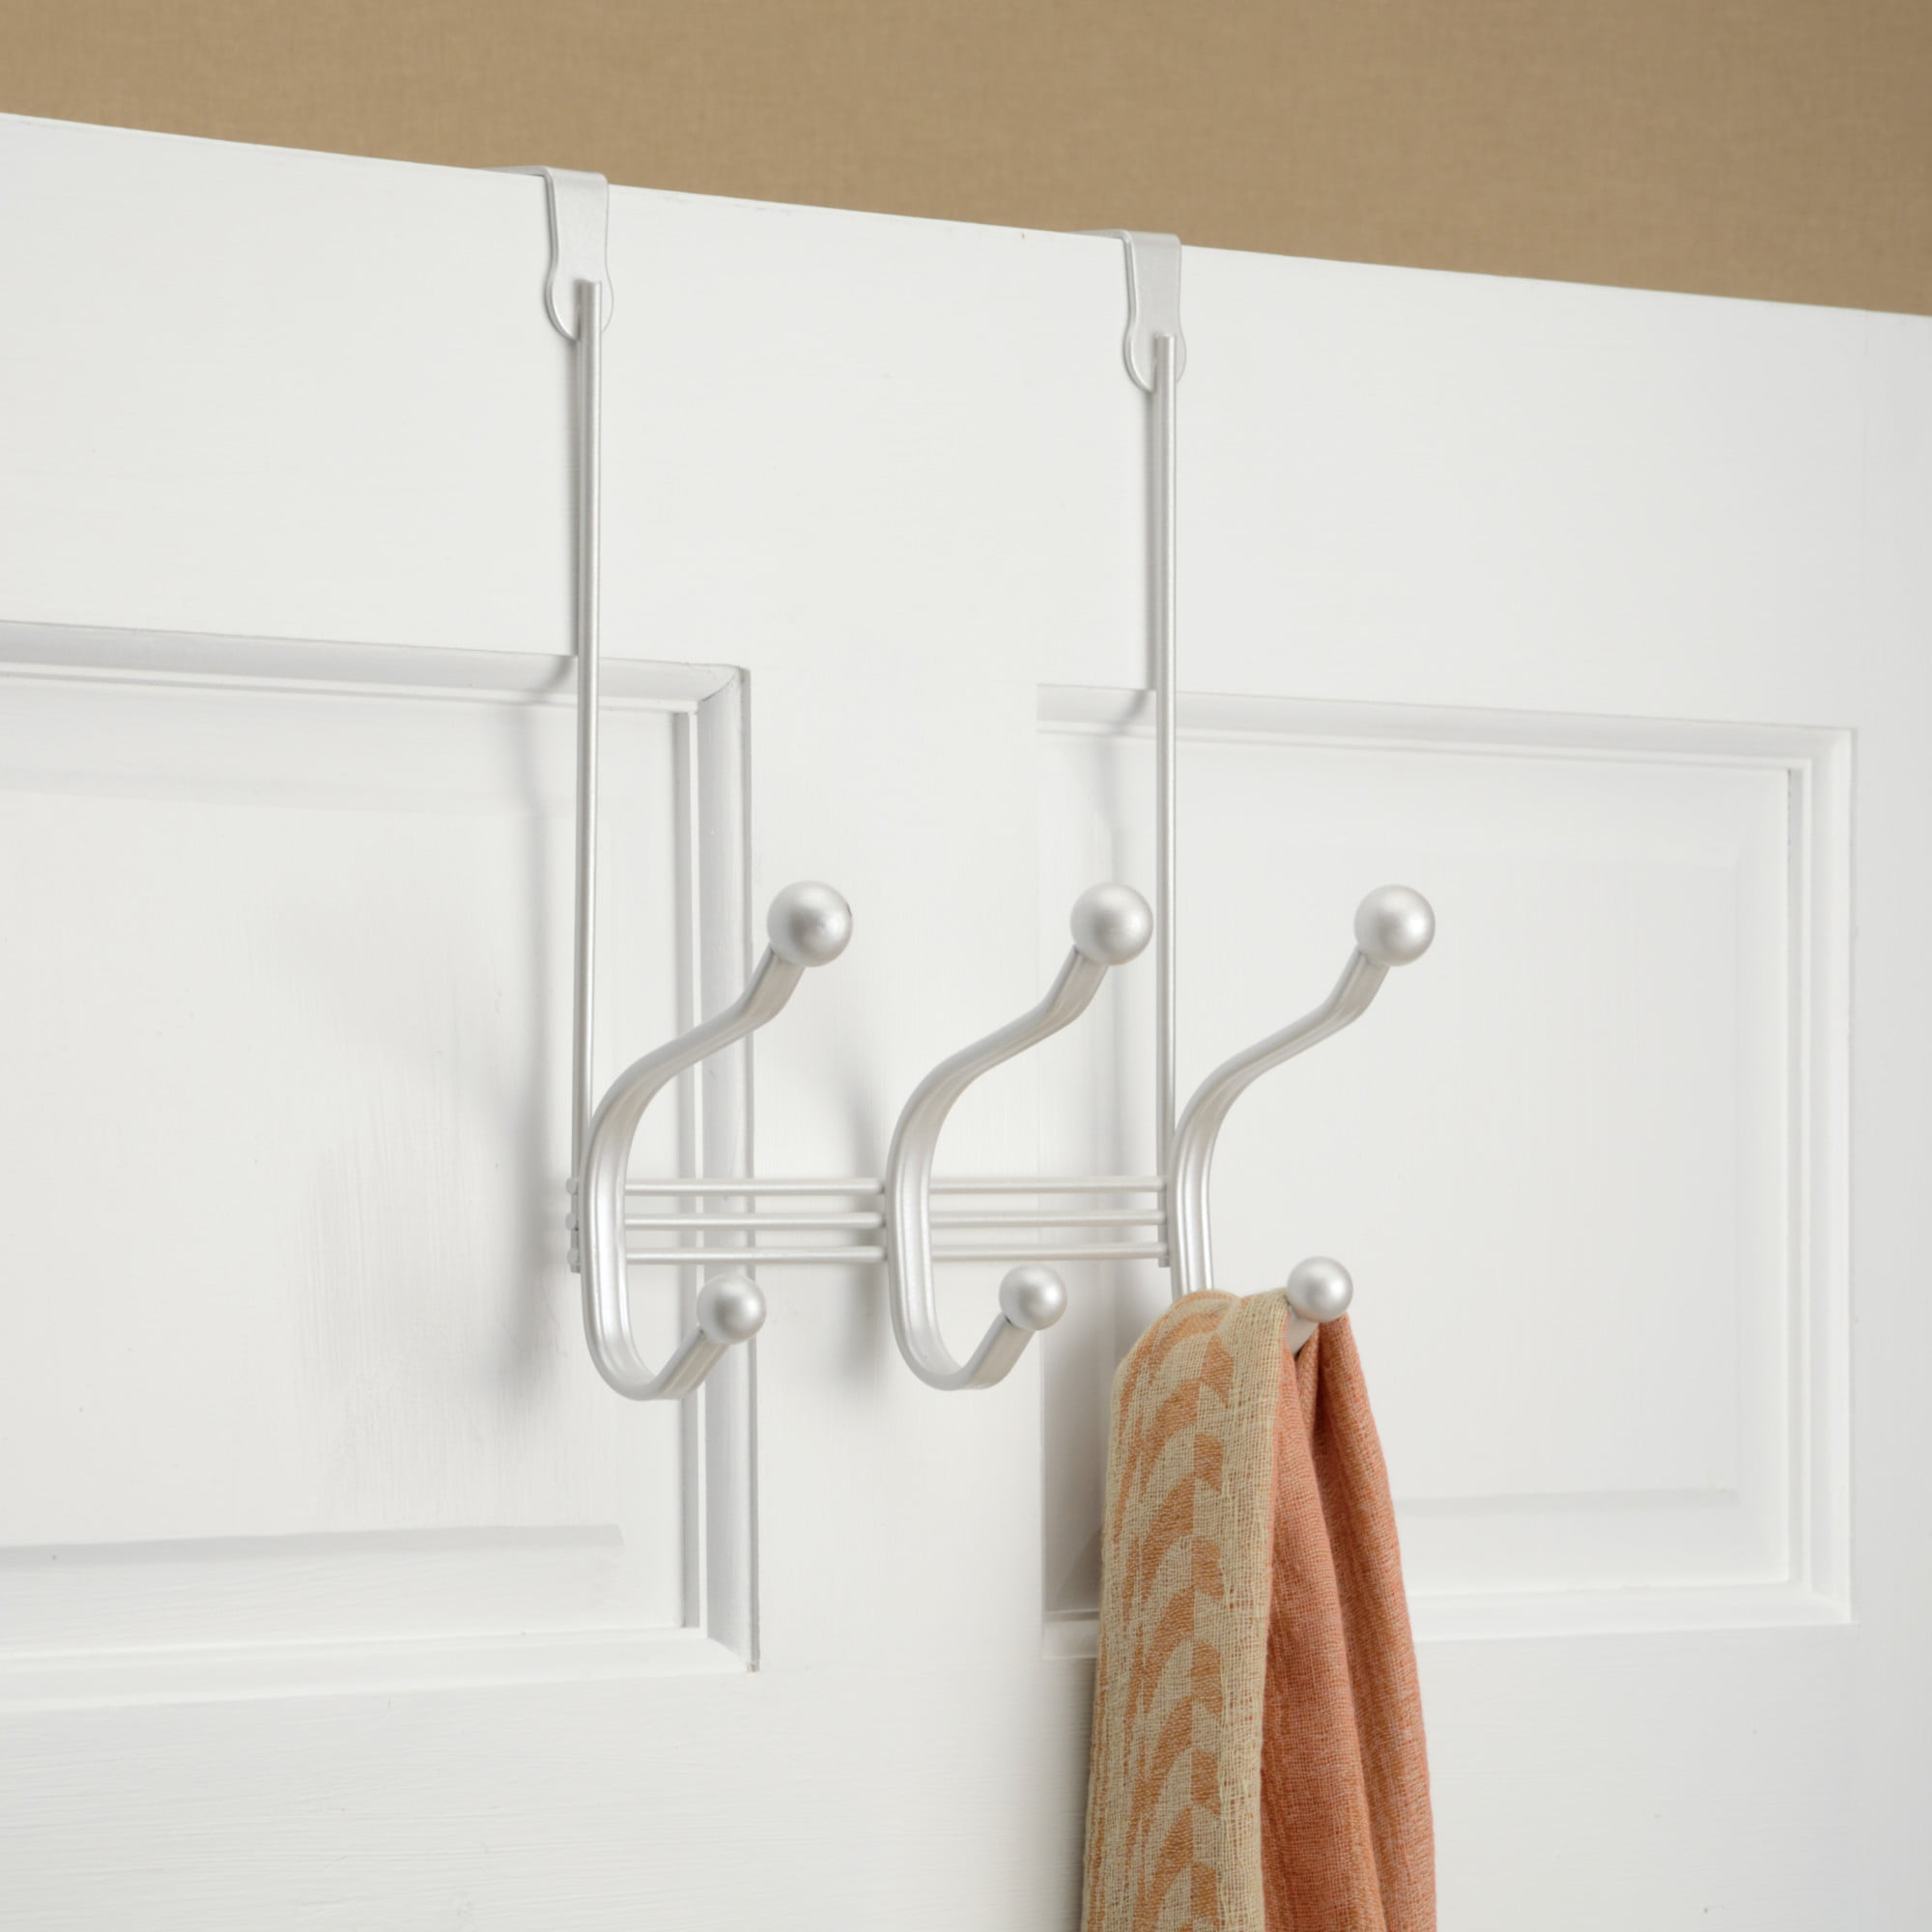 Chrome Over The Door Hanger 4 Hooks Clothes Coat Washroom Towel Home Storage New 